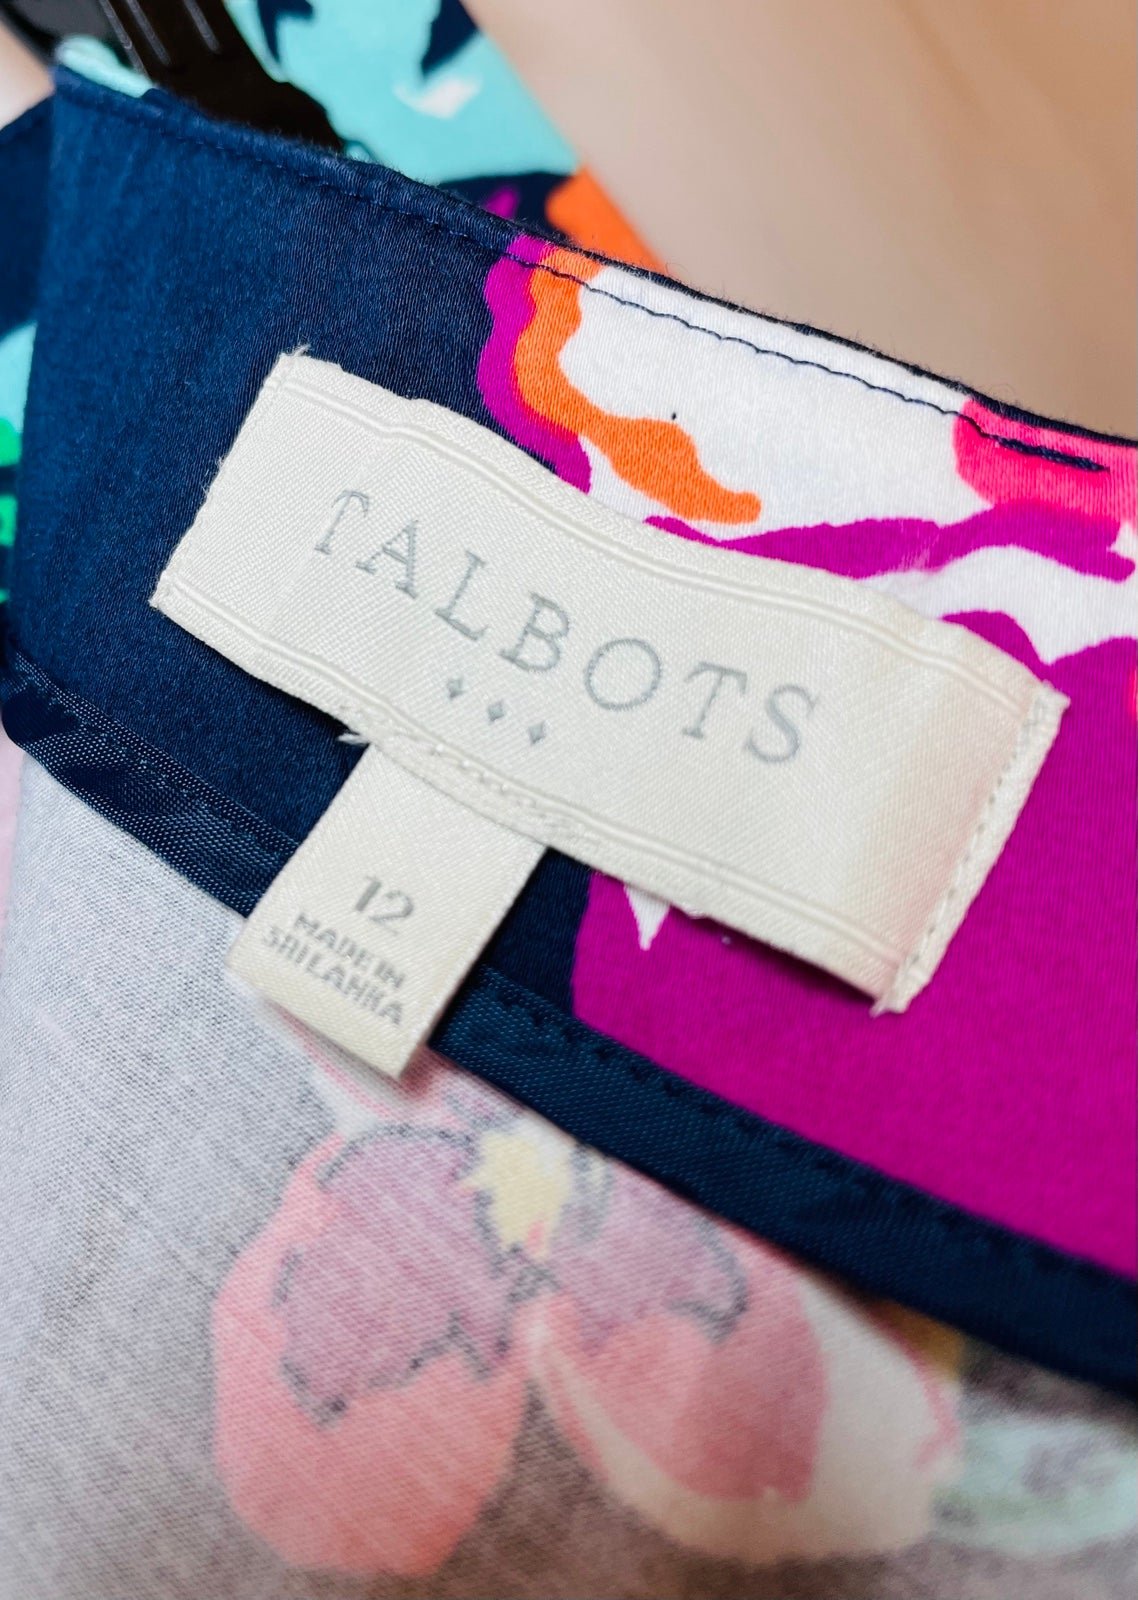 high discount Talbots Floral Mulitcor Pencil Skirt Women 12 pHu4w6crk on sale